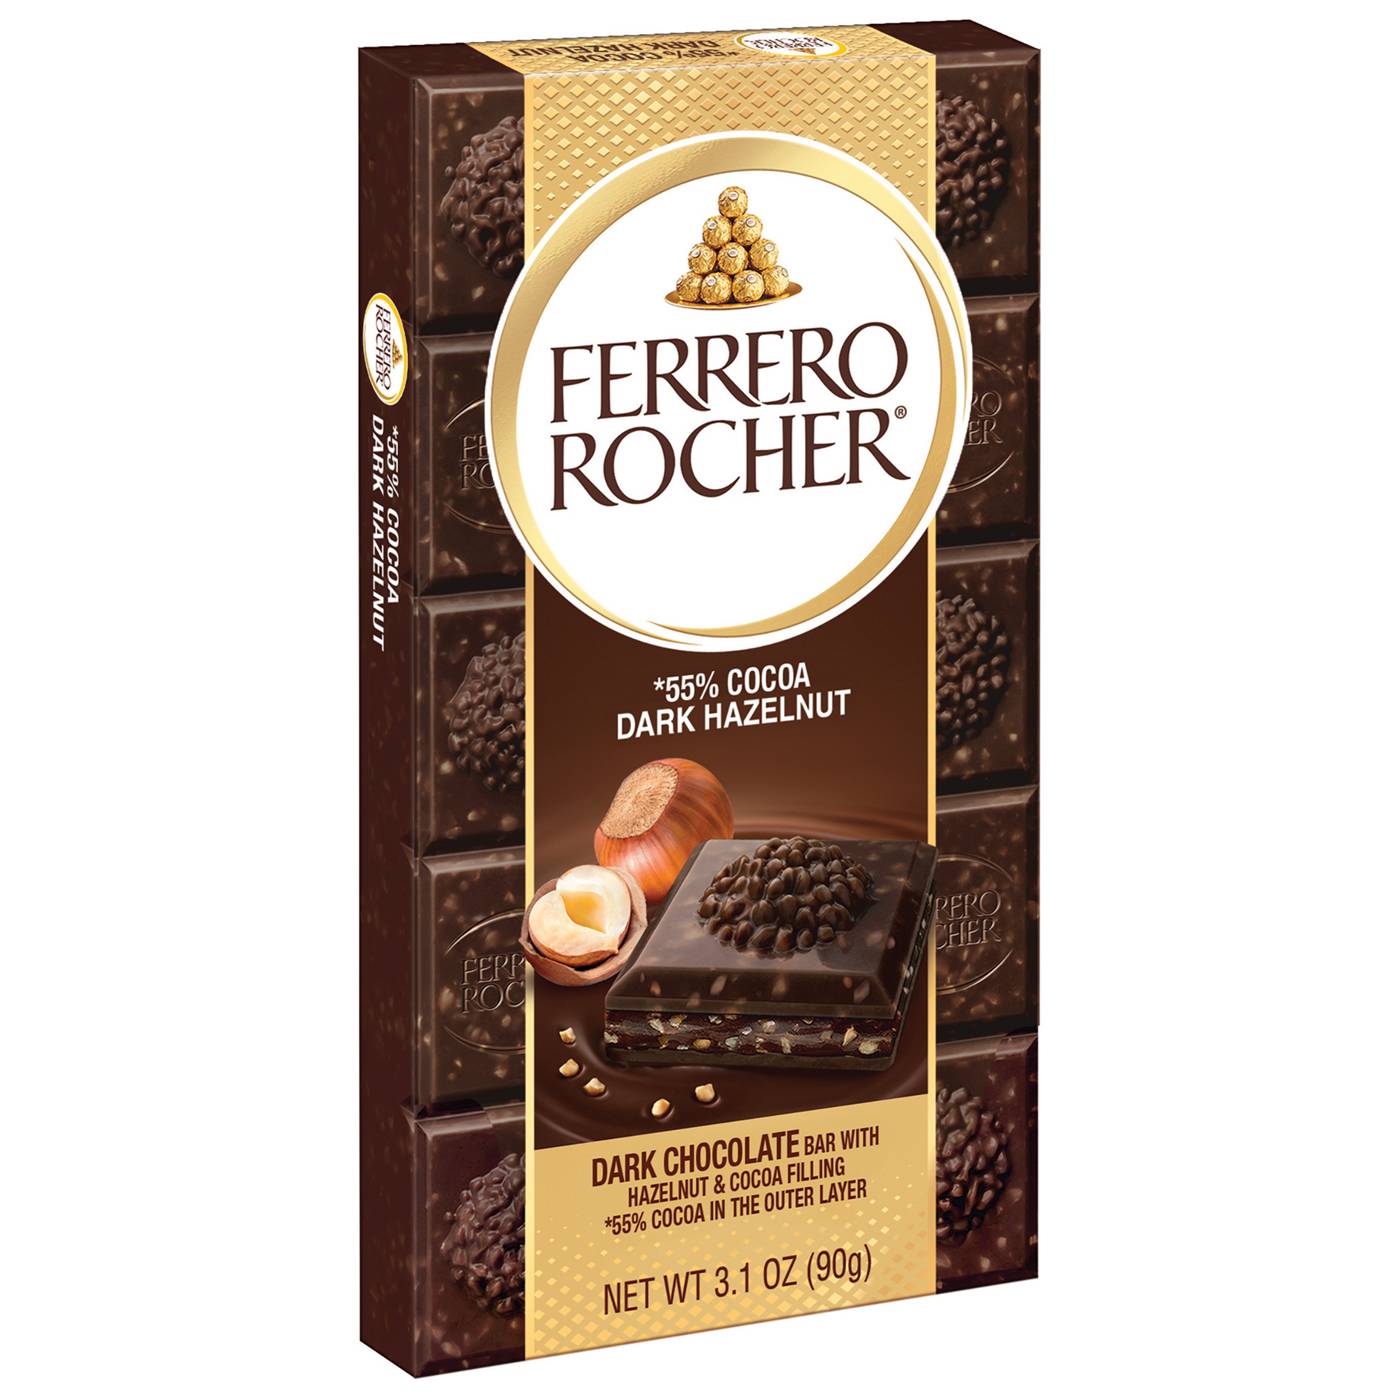 Ferrero Rocher 55% Cocoa Dark Hazelnut Chocolate Bar; image 2 of 5